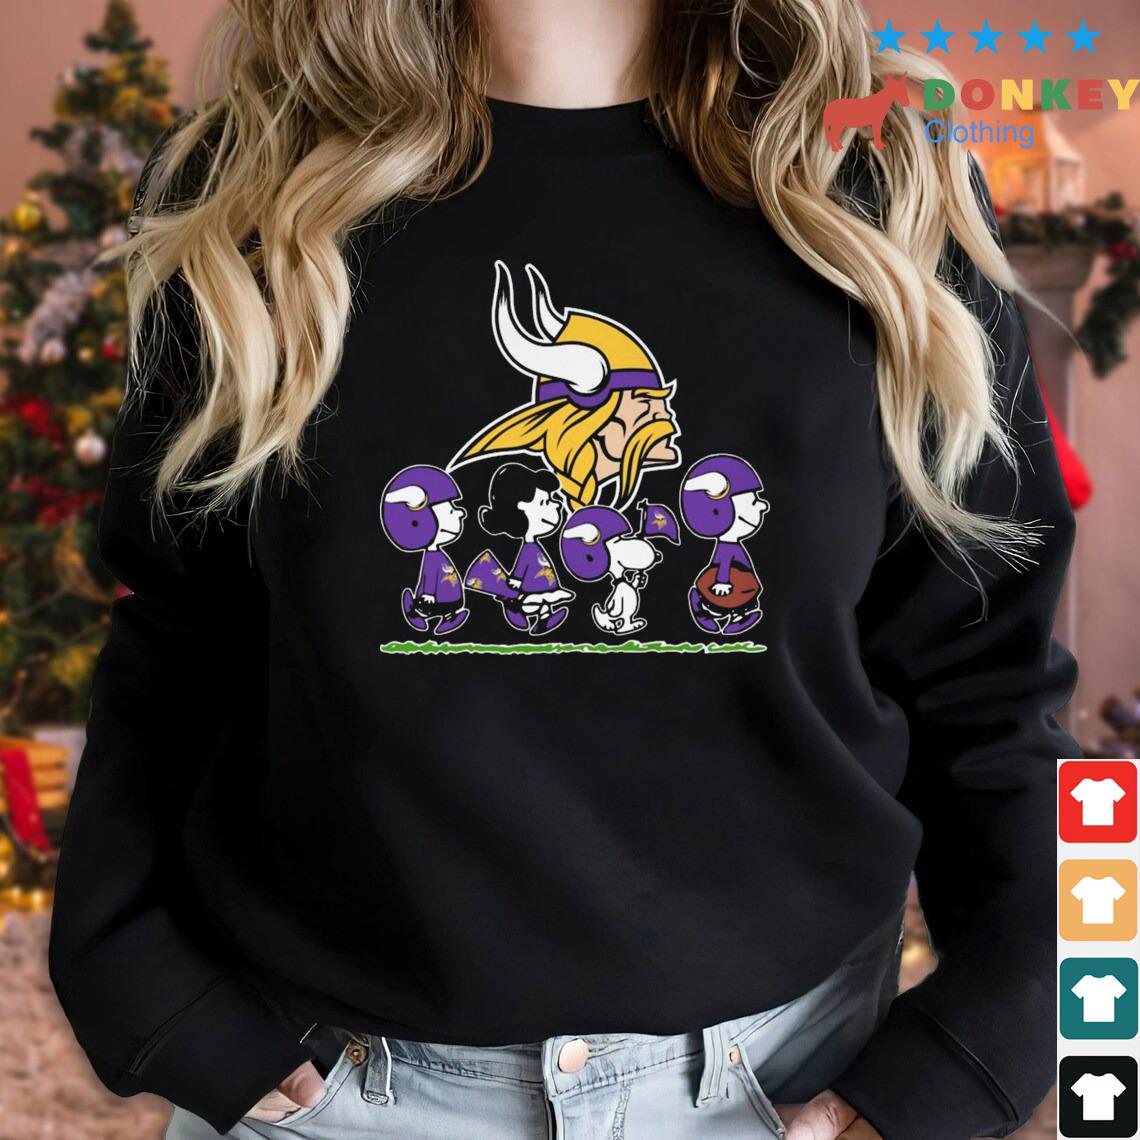 The Peanuts Character Snoopy And Friend Minnesota Vikings shirt